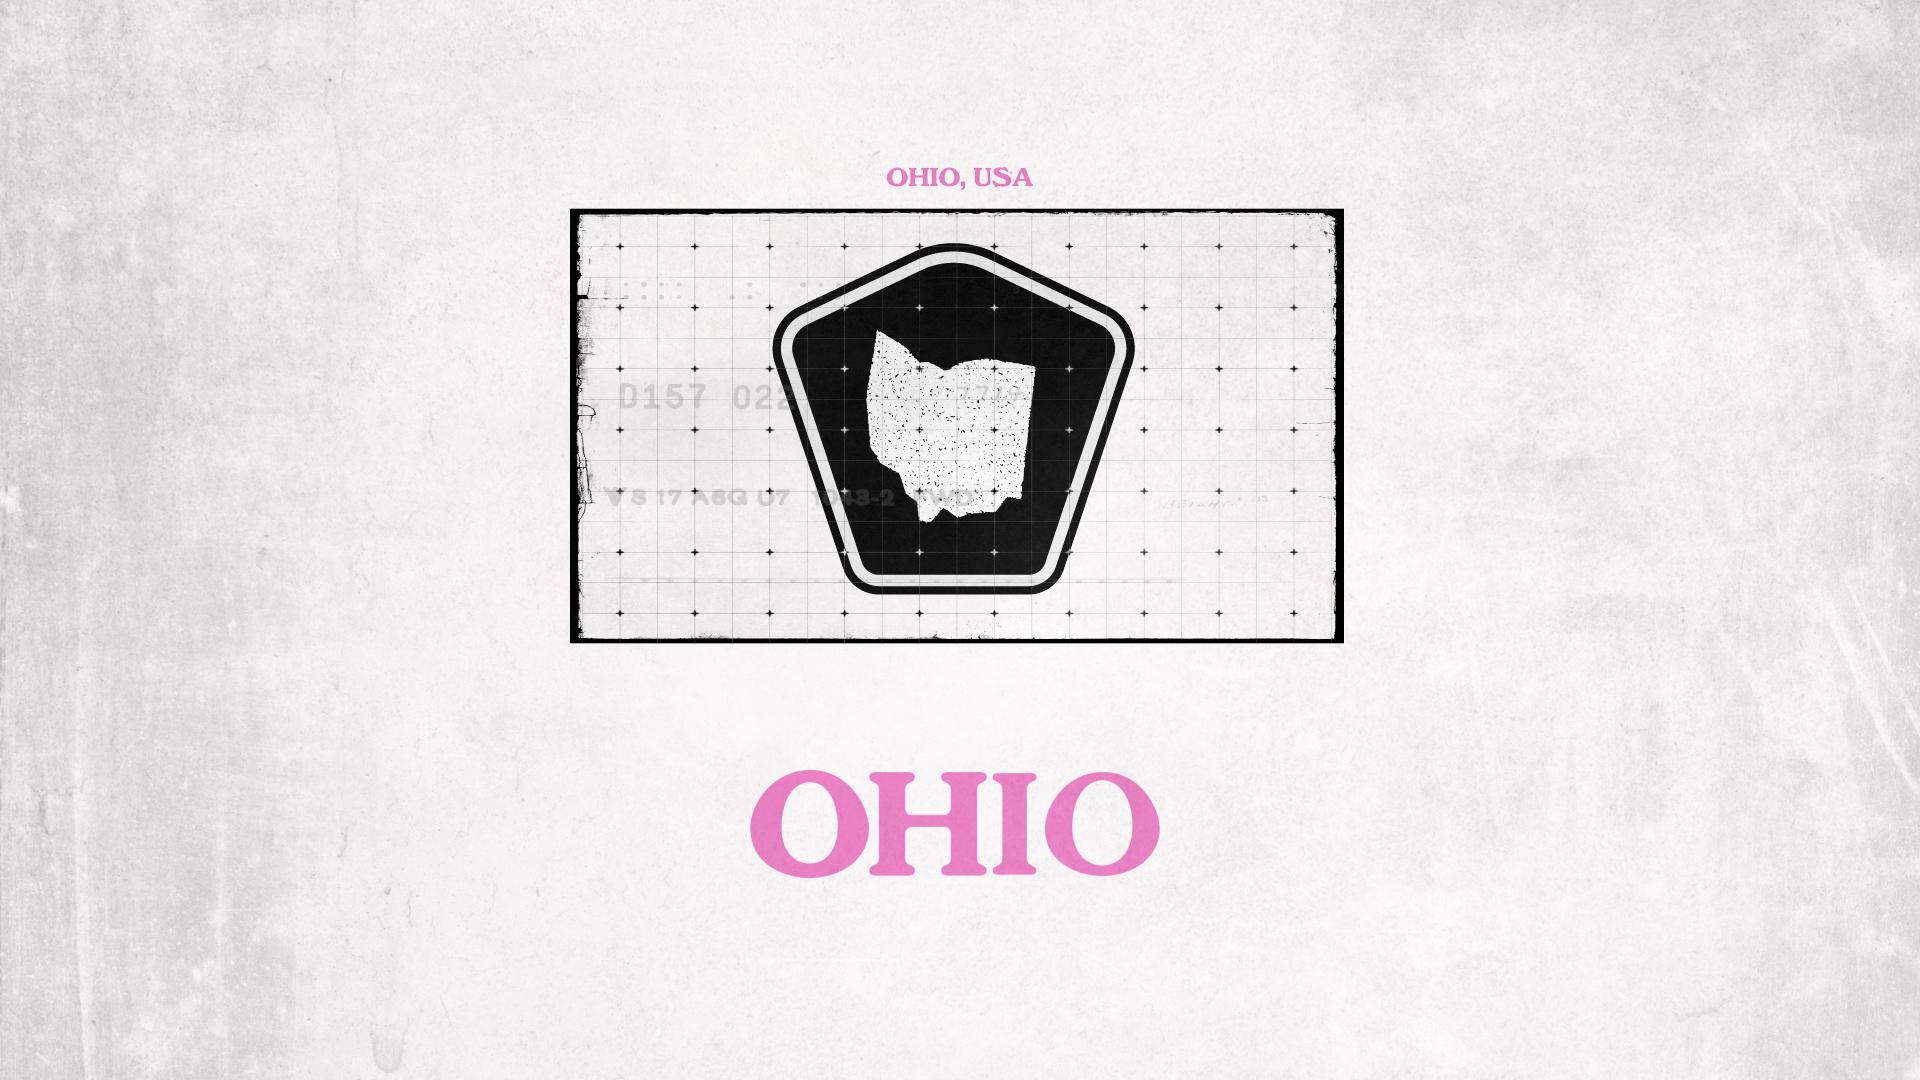 Elle King - Ohio (Official Lyric Video)